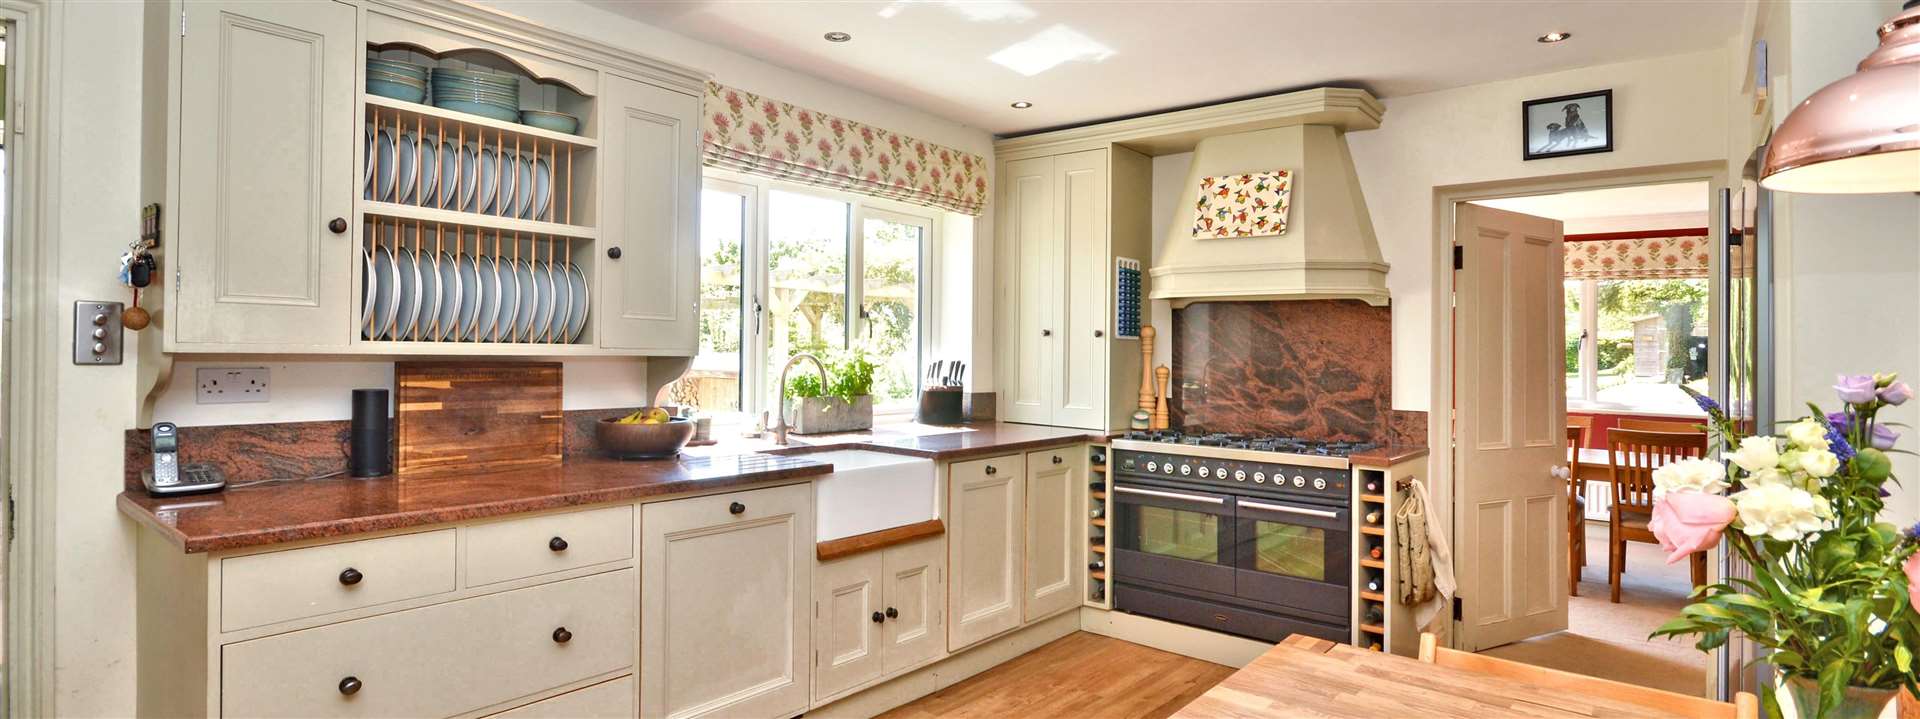 Lilac Cottage has a bespoke wood kitchen